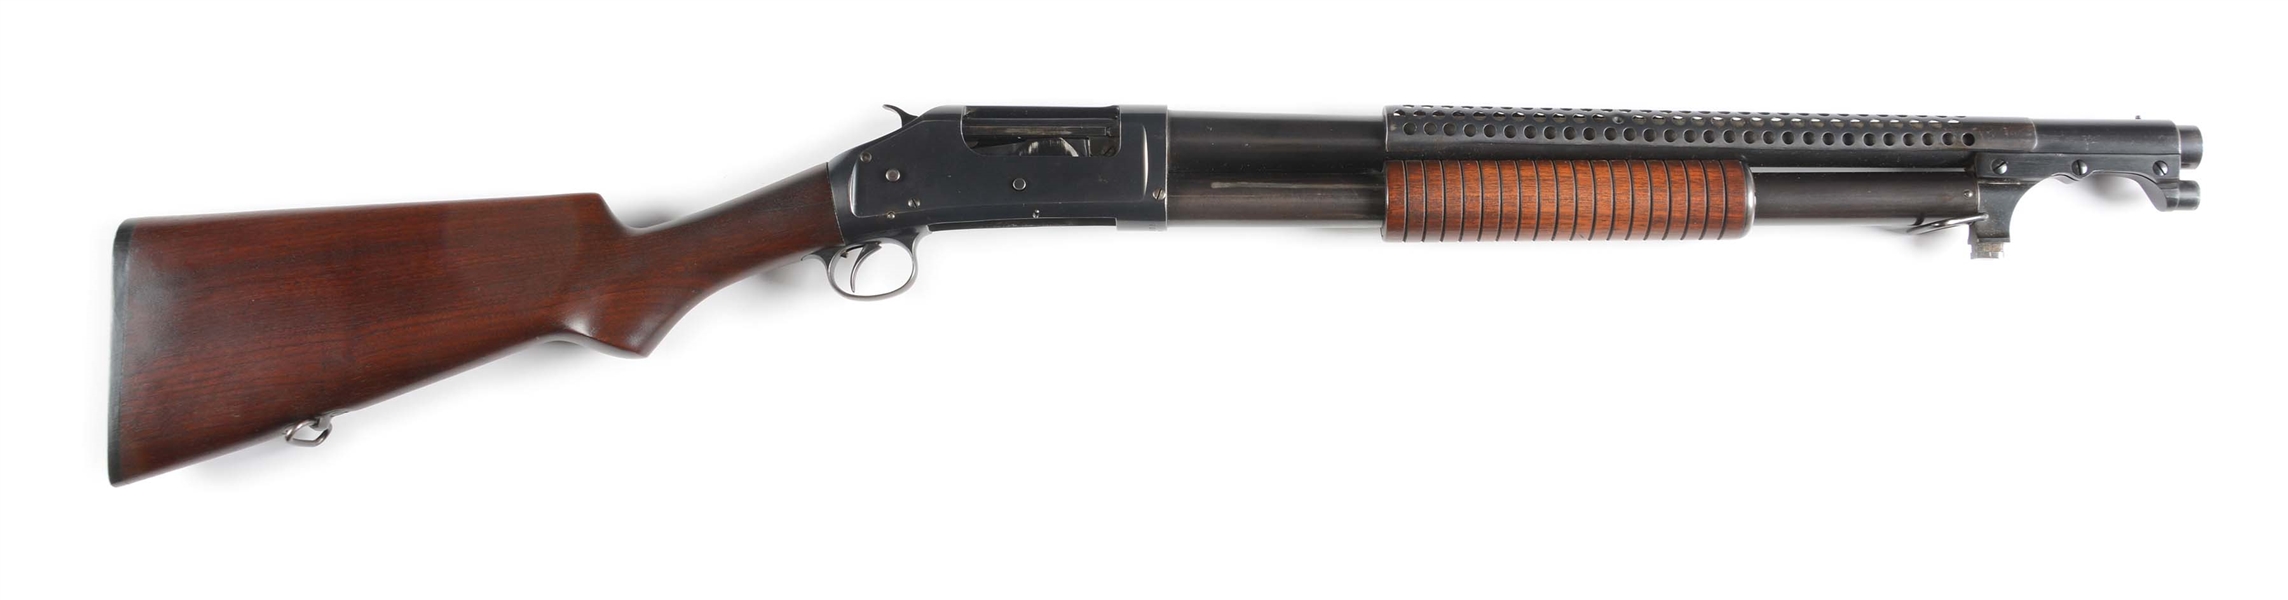 (C) WORLD WAR I WINCHESTER MODEL 1897 TRENCH GUN.